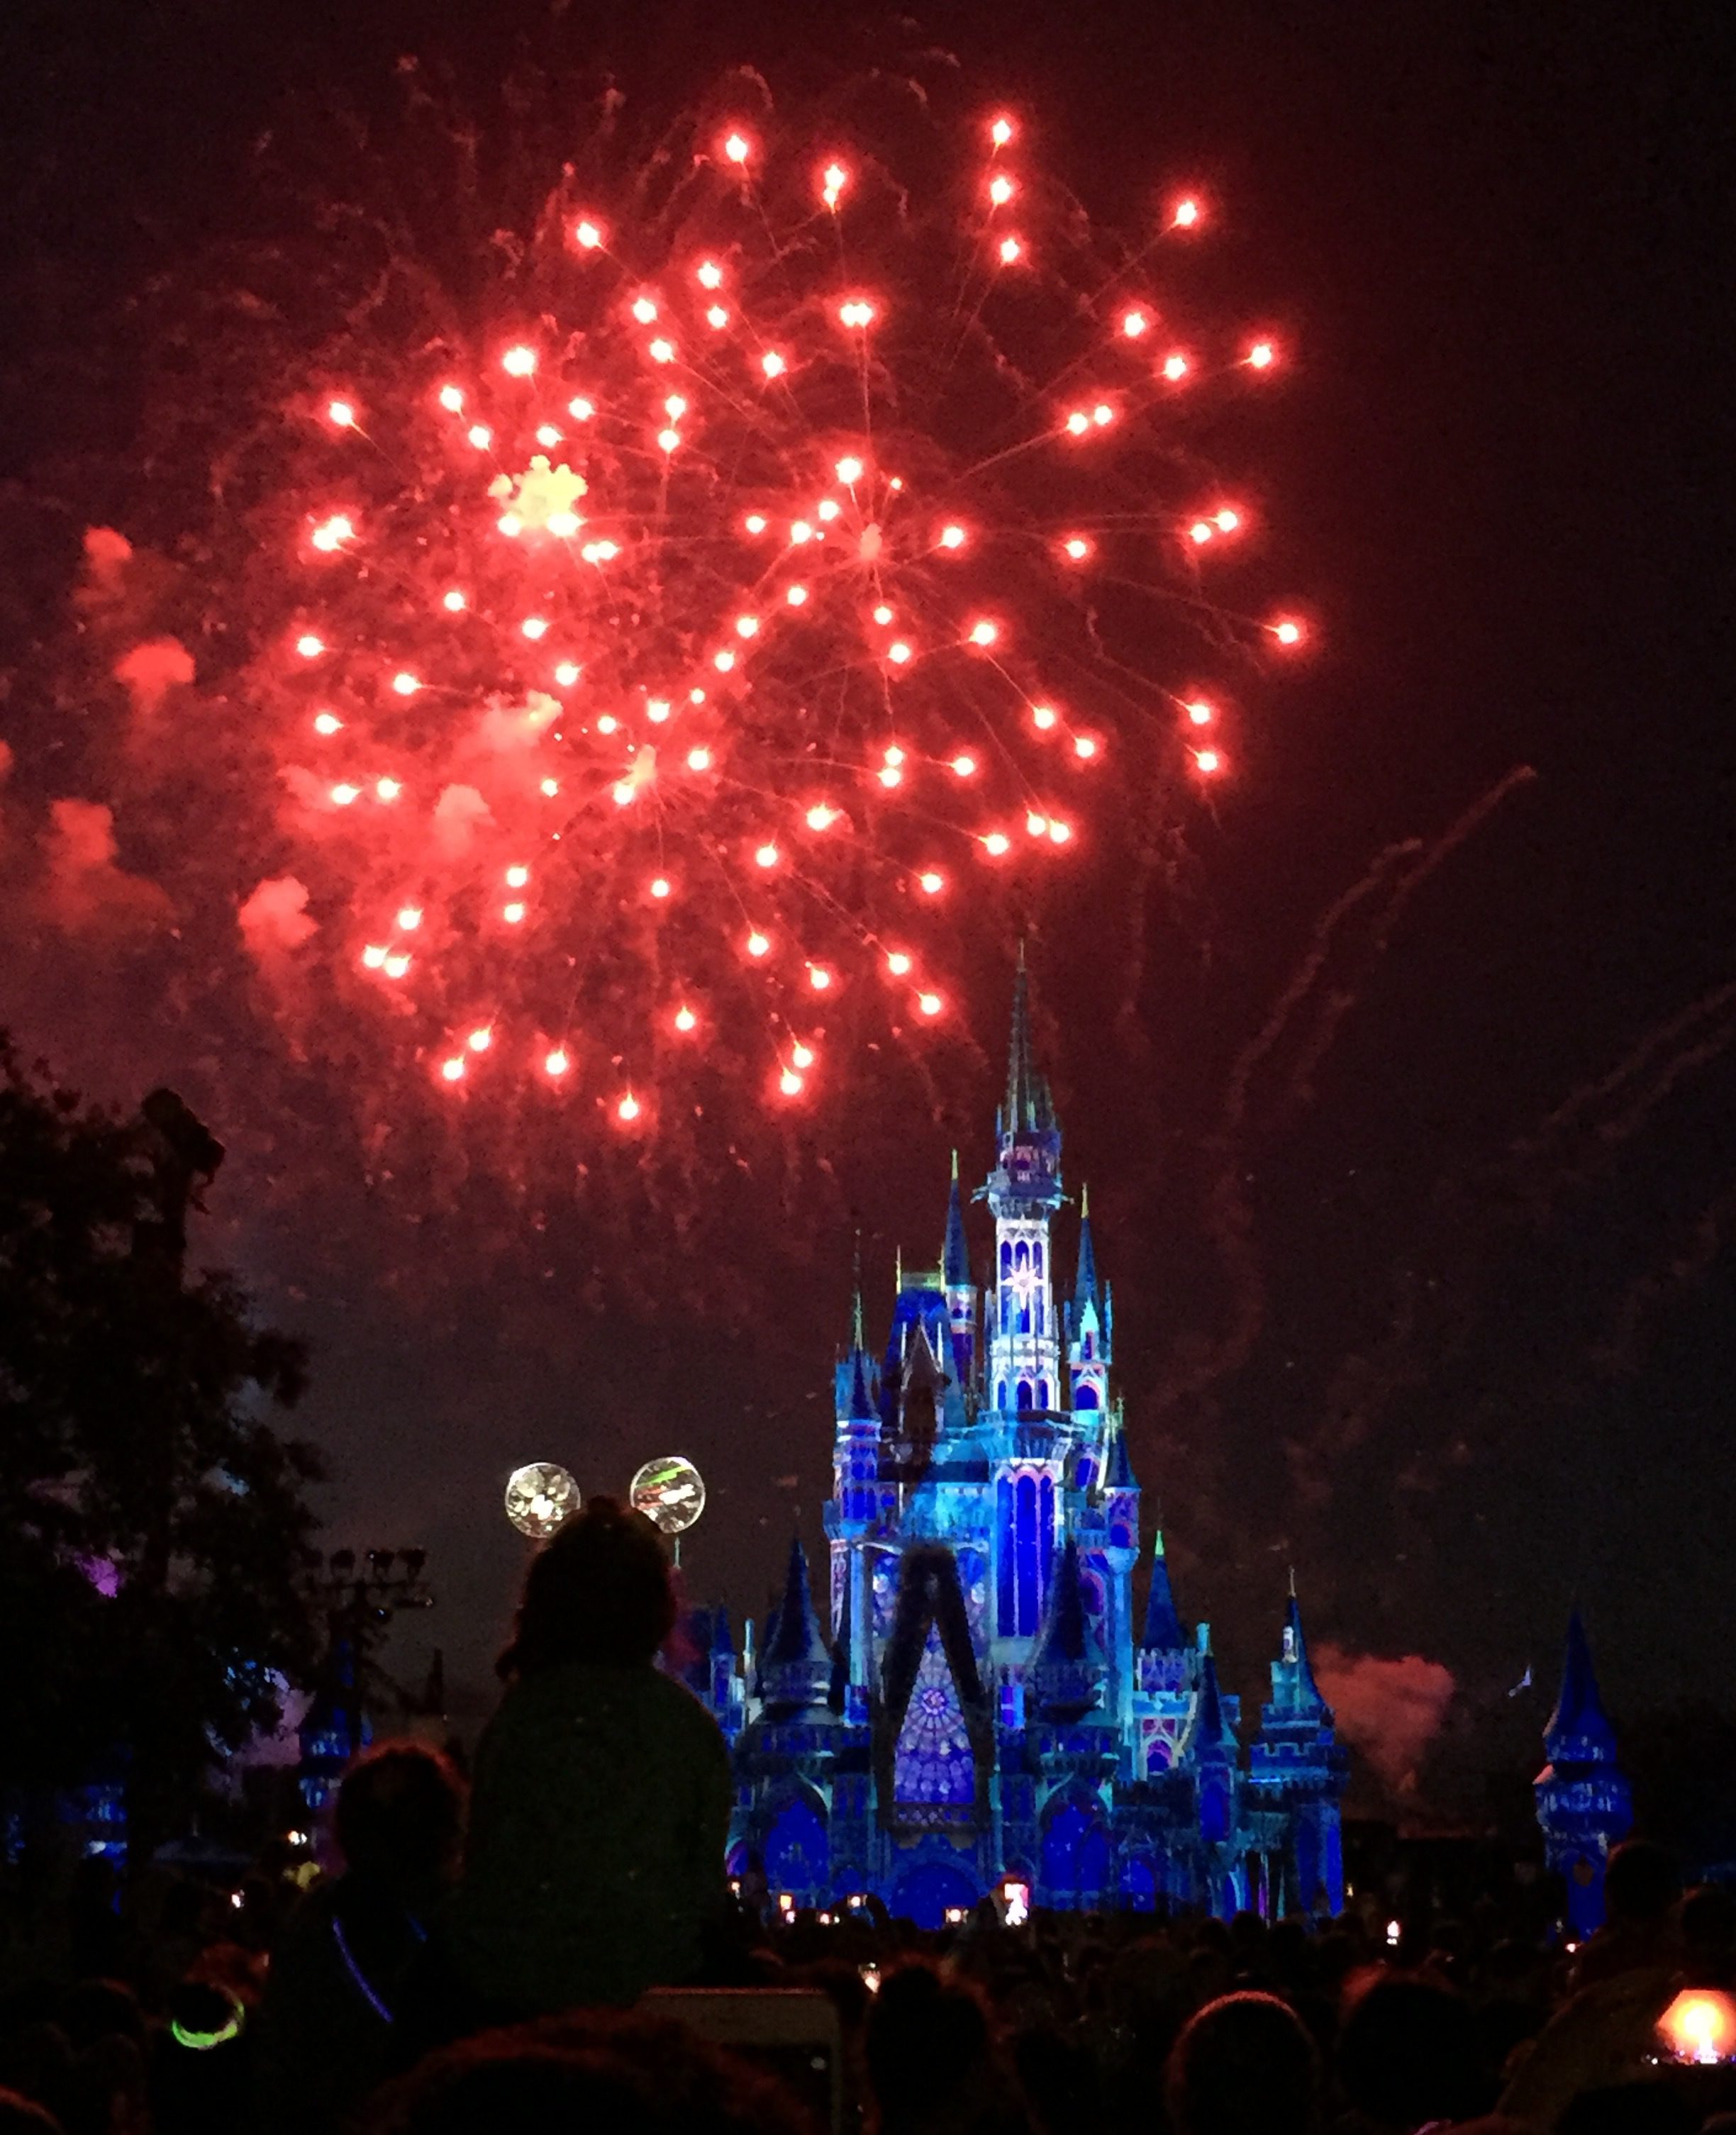 Disney fireworks